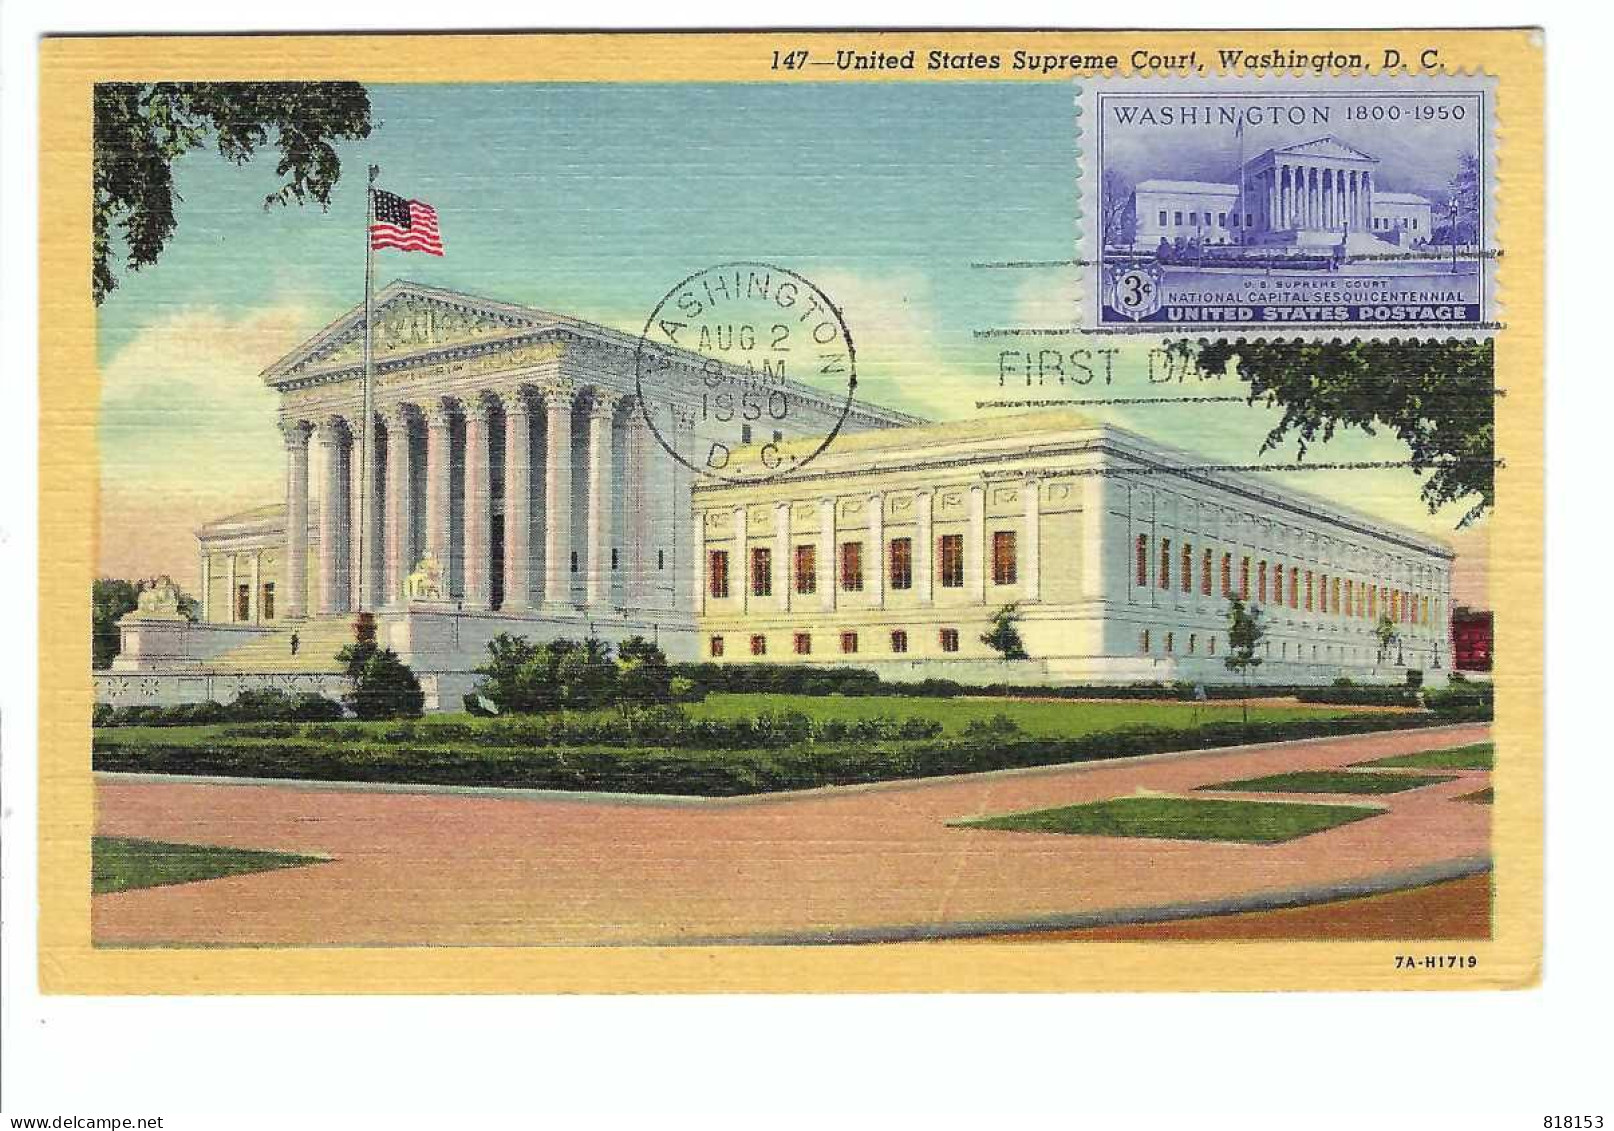 FDC  147 - United States Supreme Court , Washington D C     AUG 2 1950 - Gebruikt